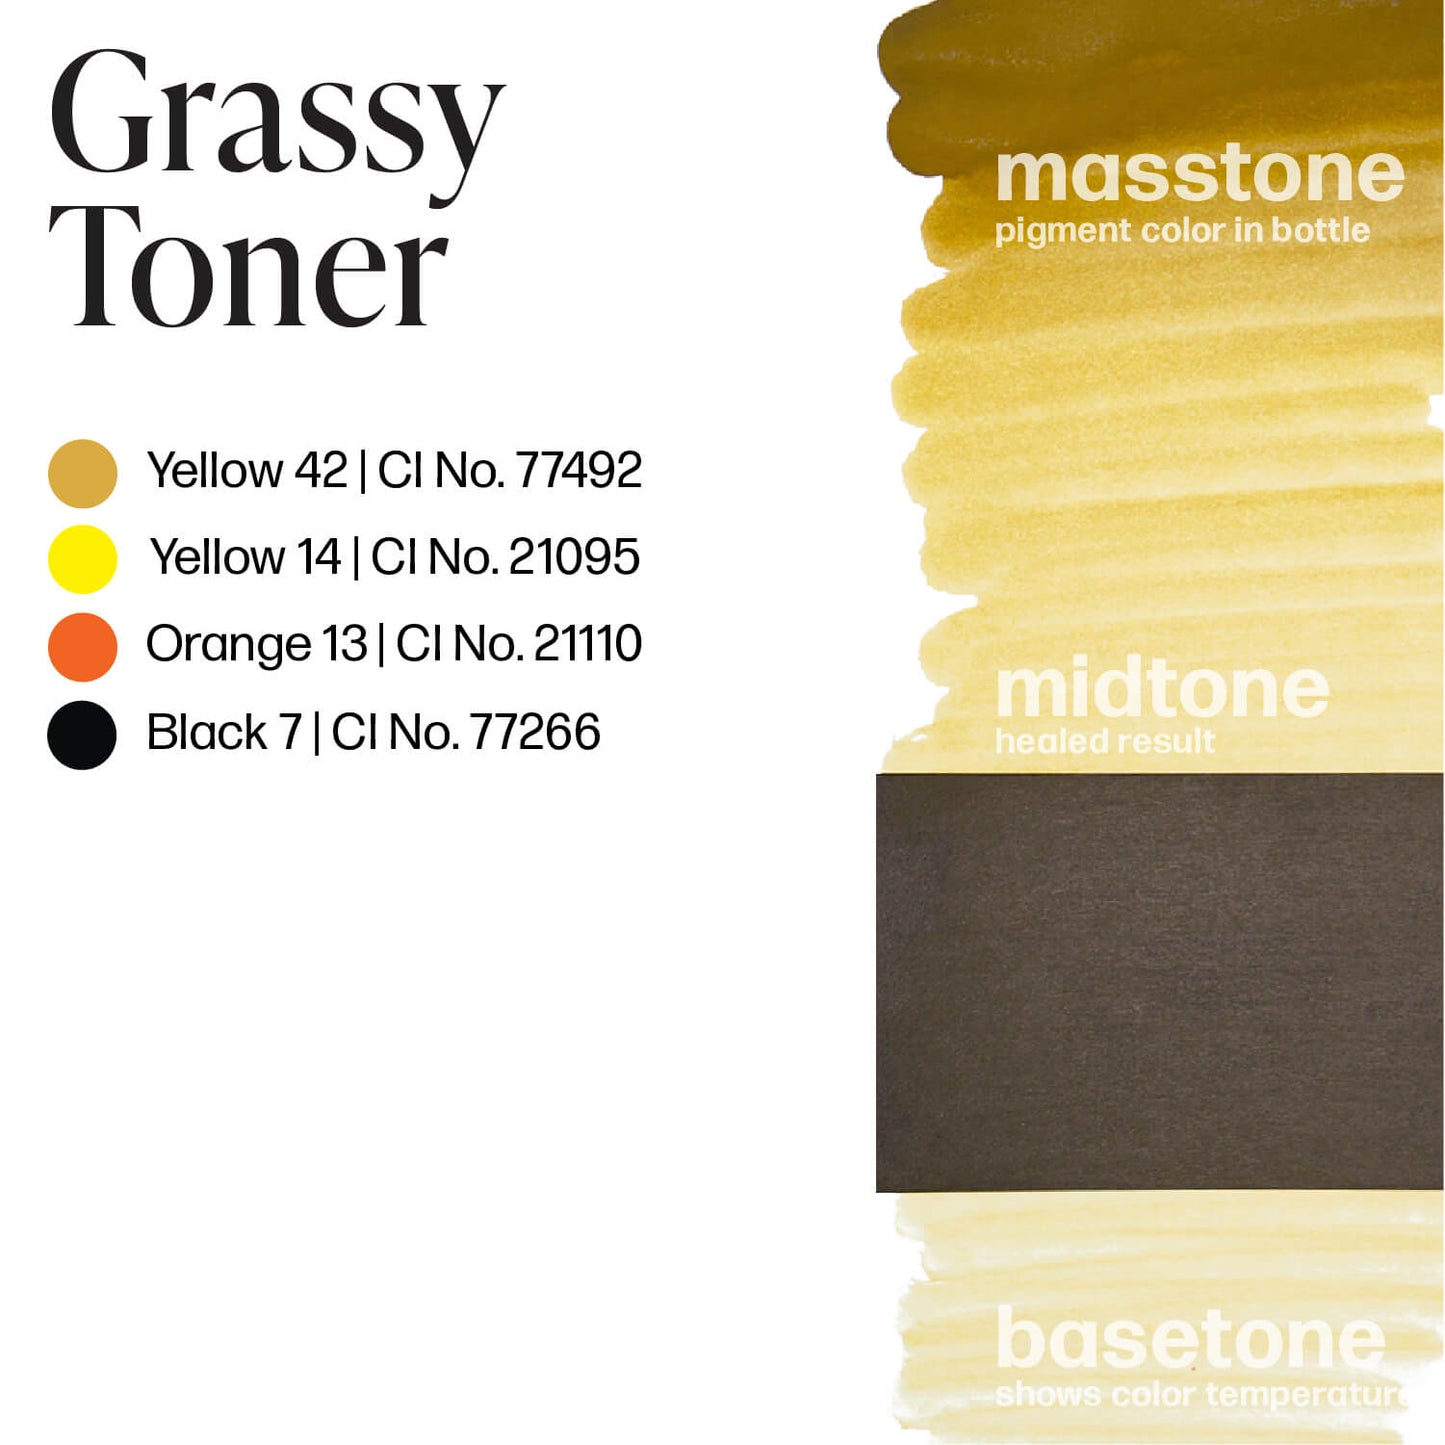 Perma Blend Grassy Toner Brow Ink Drawdown Masstone Midtone Basetone